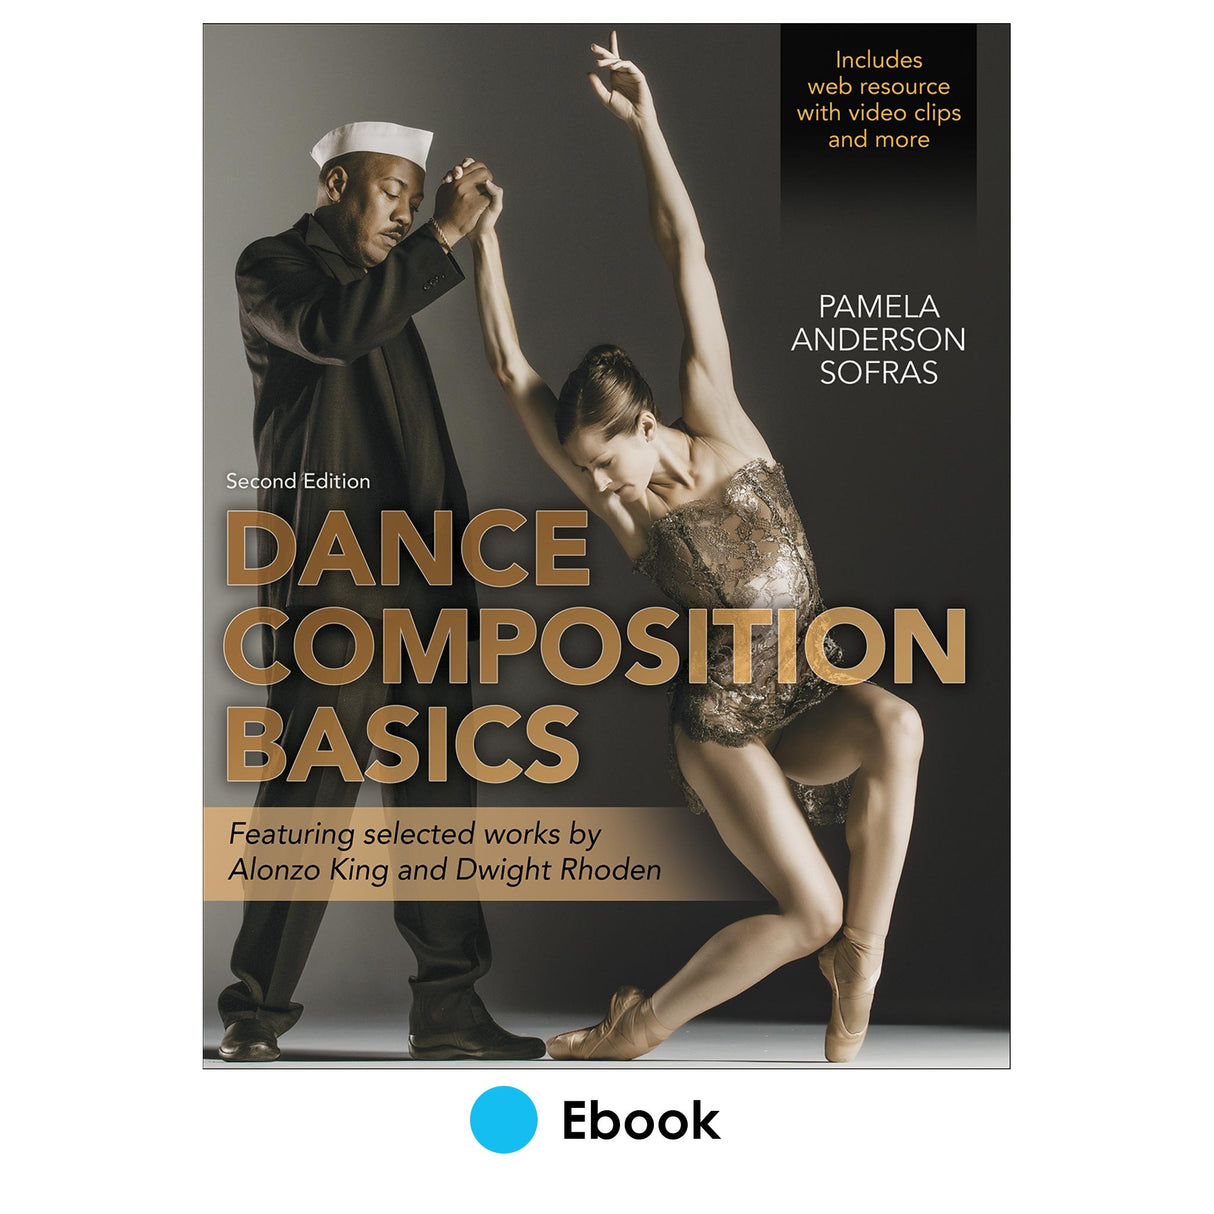 Dance Composition Basics 2nd Edition Enhanced epub With Web Resource